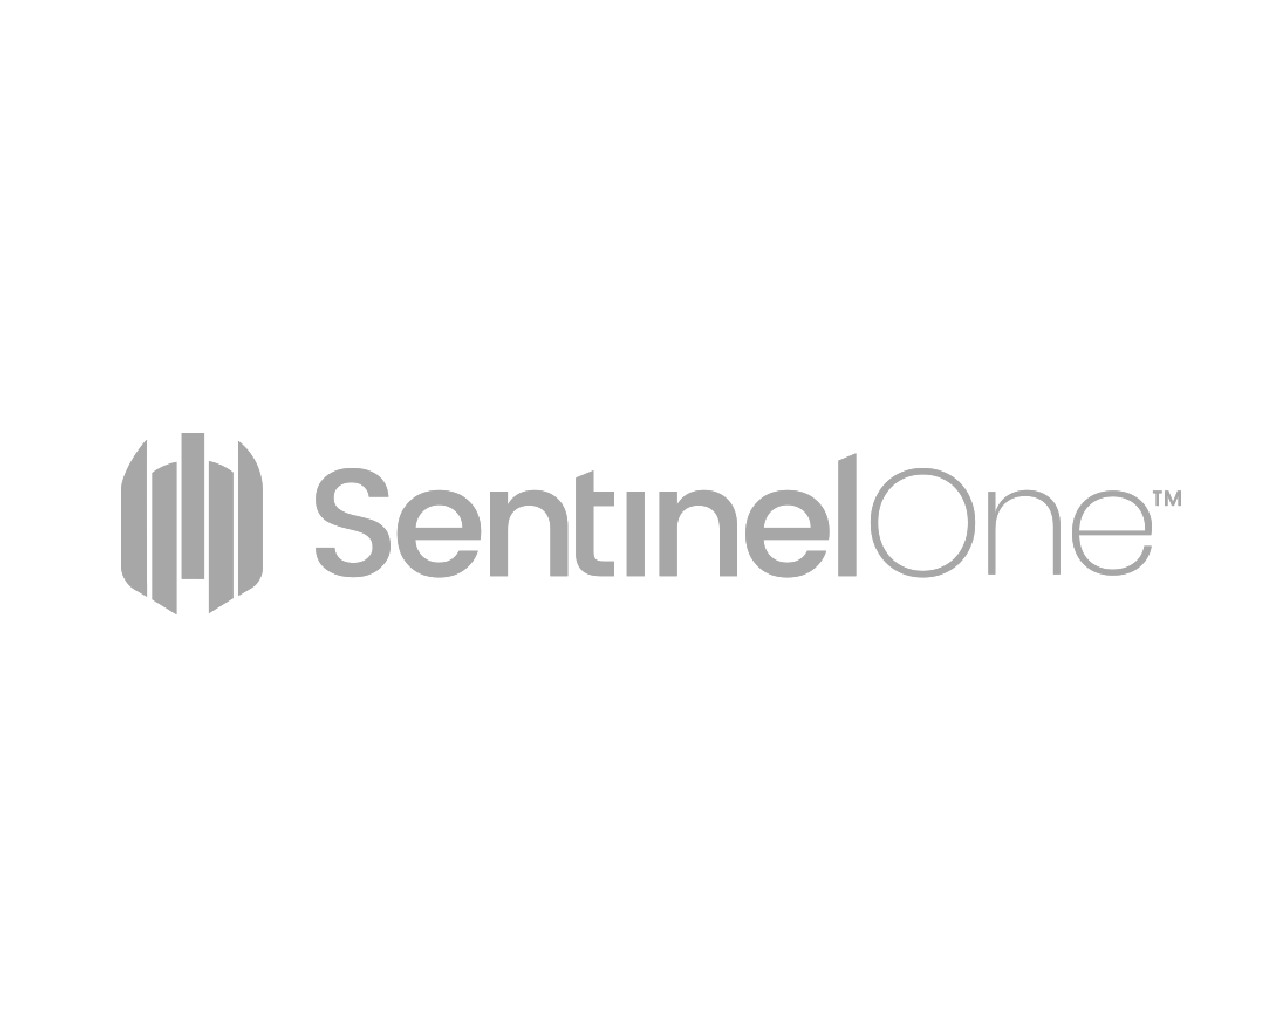 Sentinel One Logo